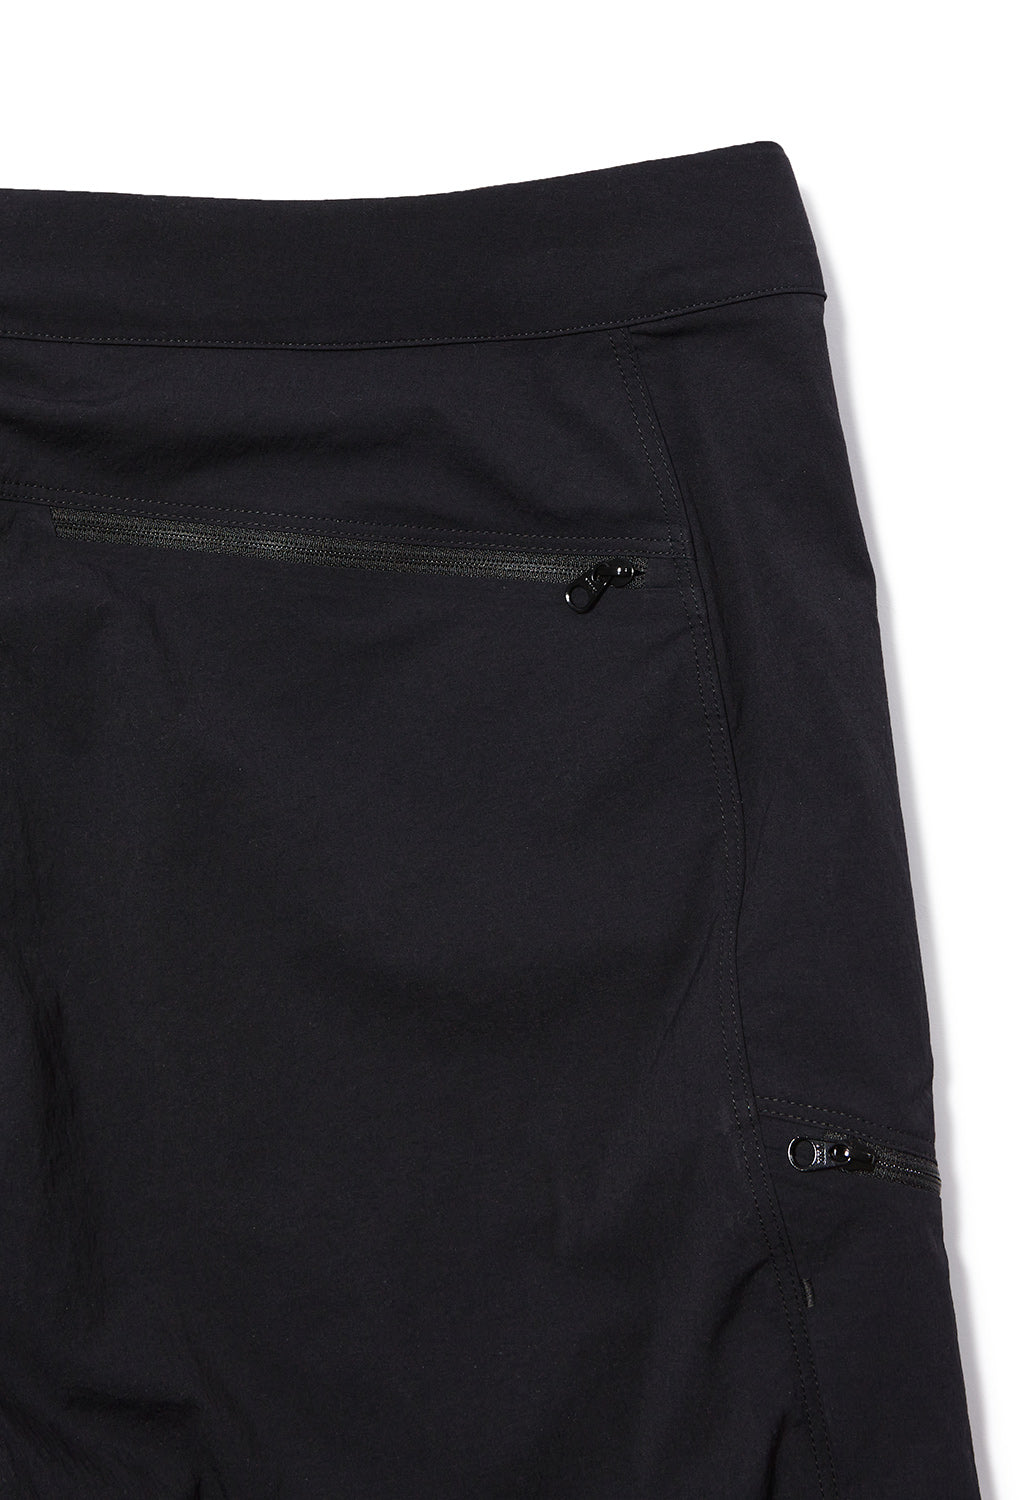 Arc'teryx Men's Gamma Quick Dry 9" Shorts - Black